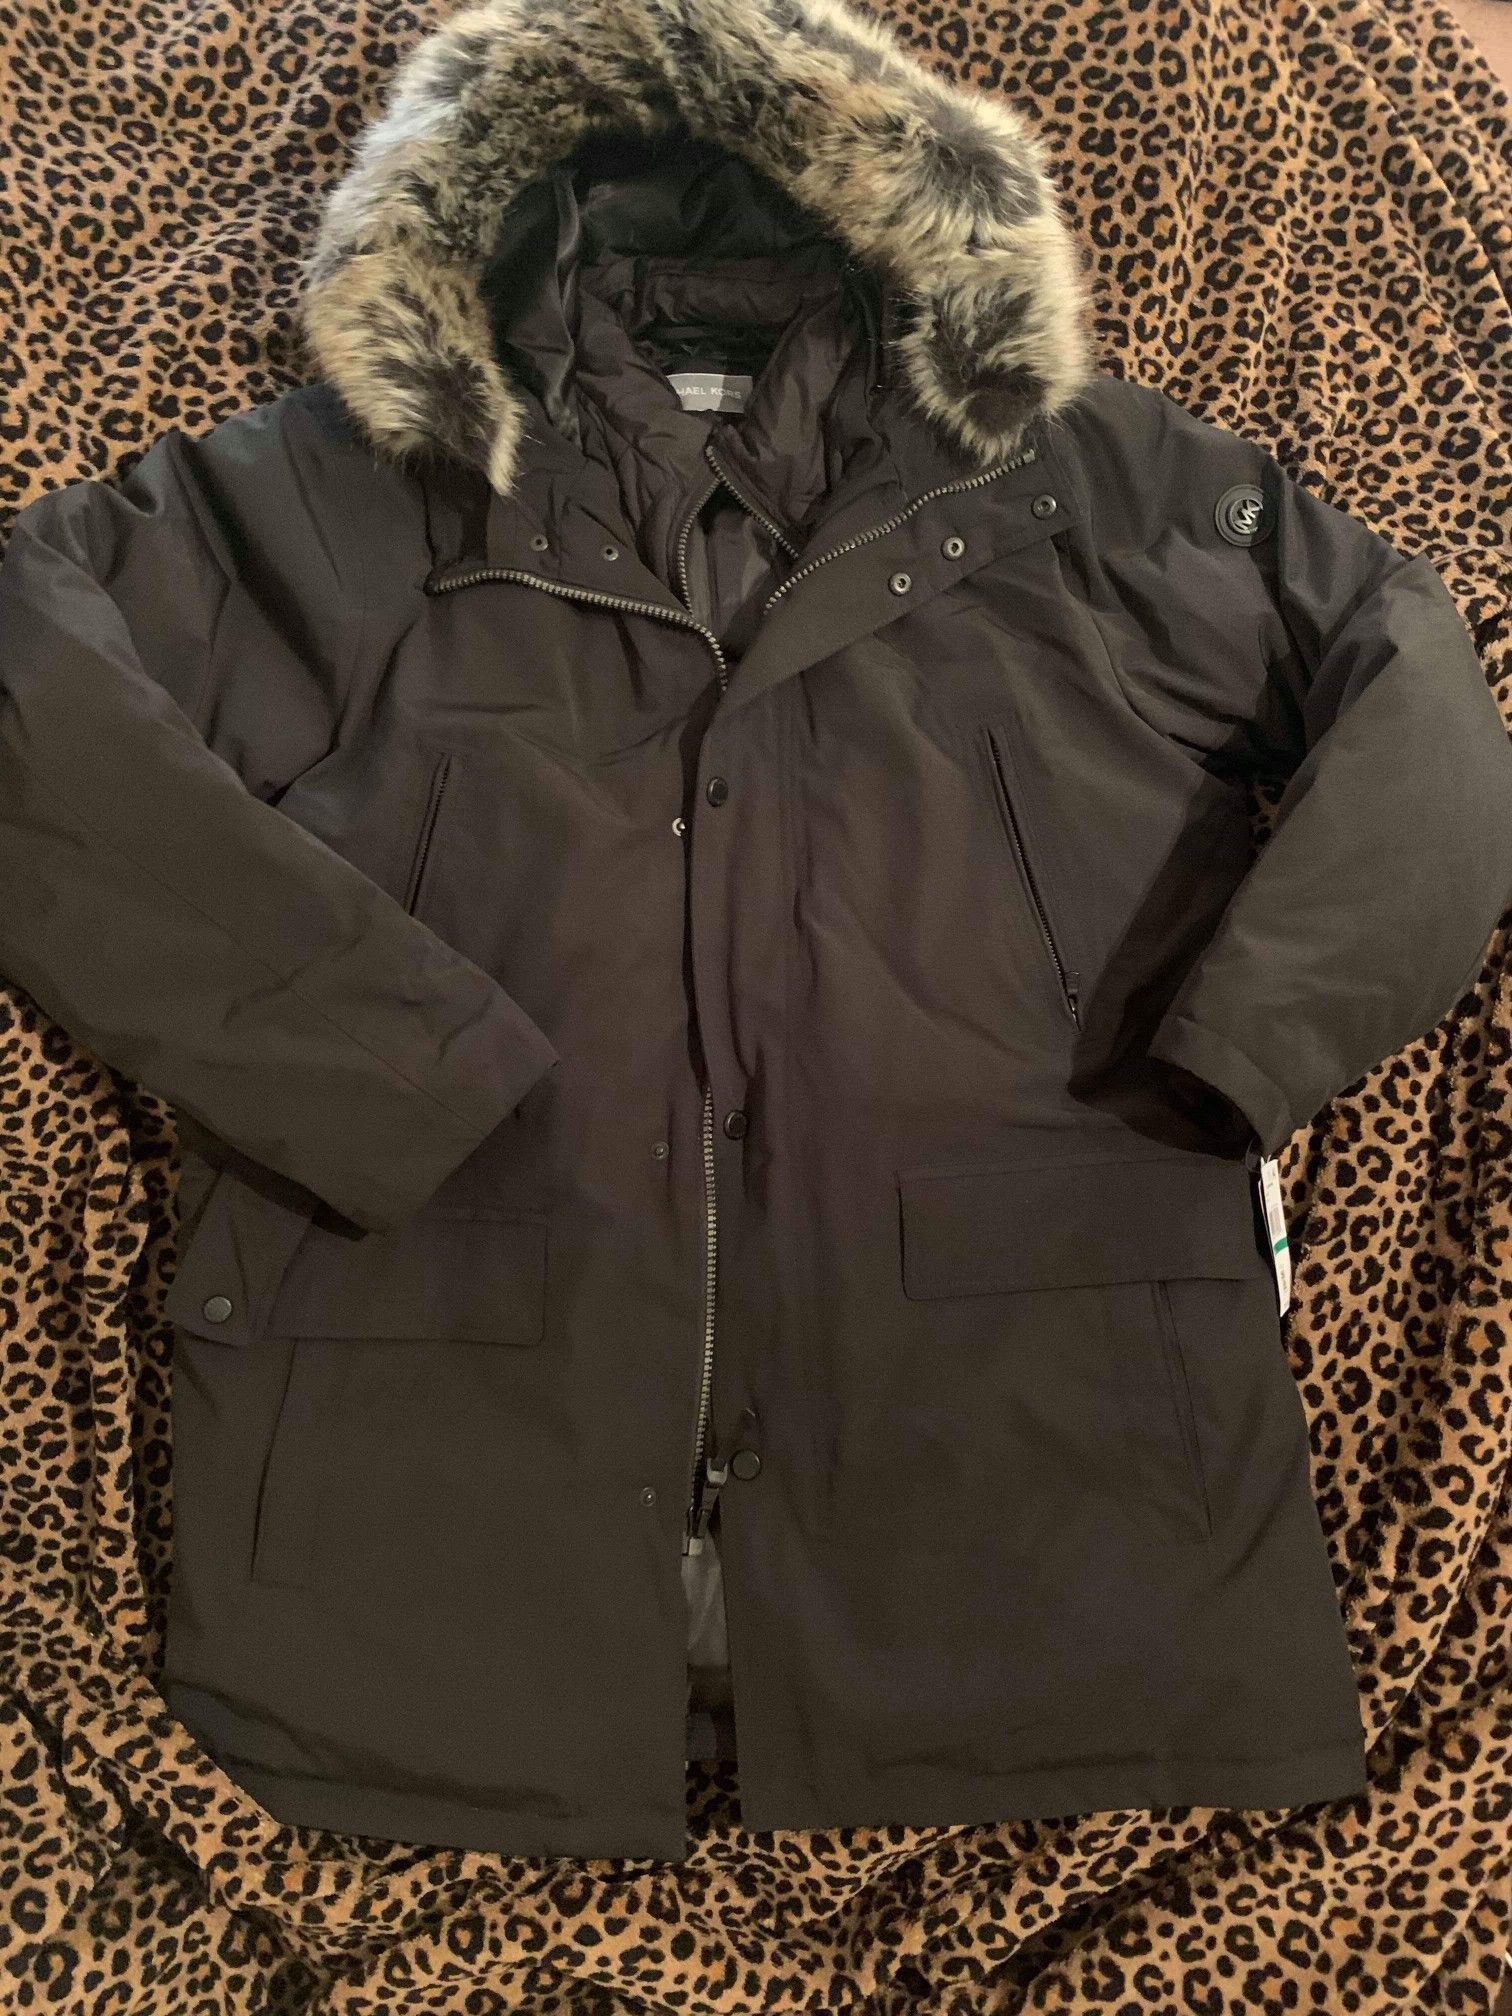 Michael Kors Faux Fur Winter Jacket BRAND NEW